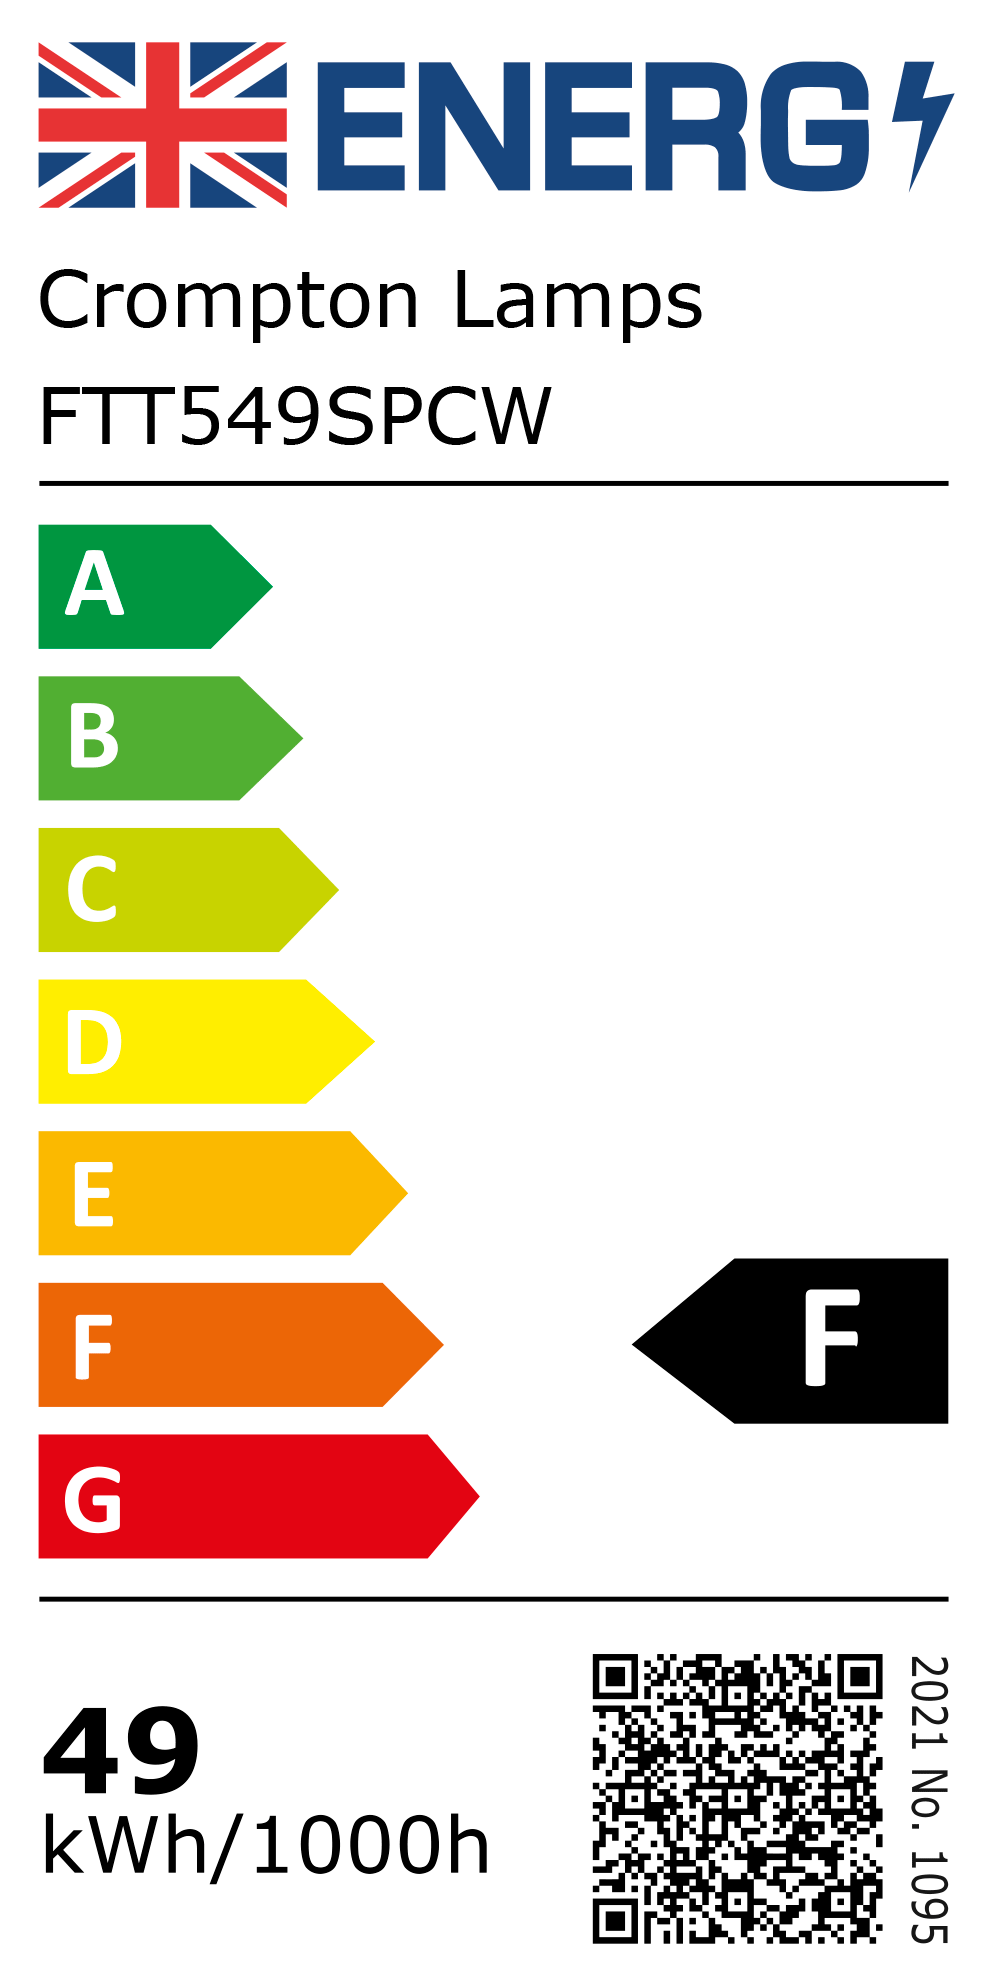 New 2021 Energy Rating Label: Stock Code FTT549SPCW